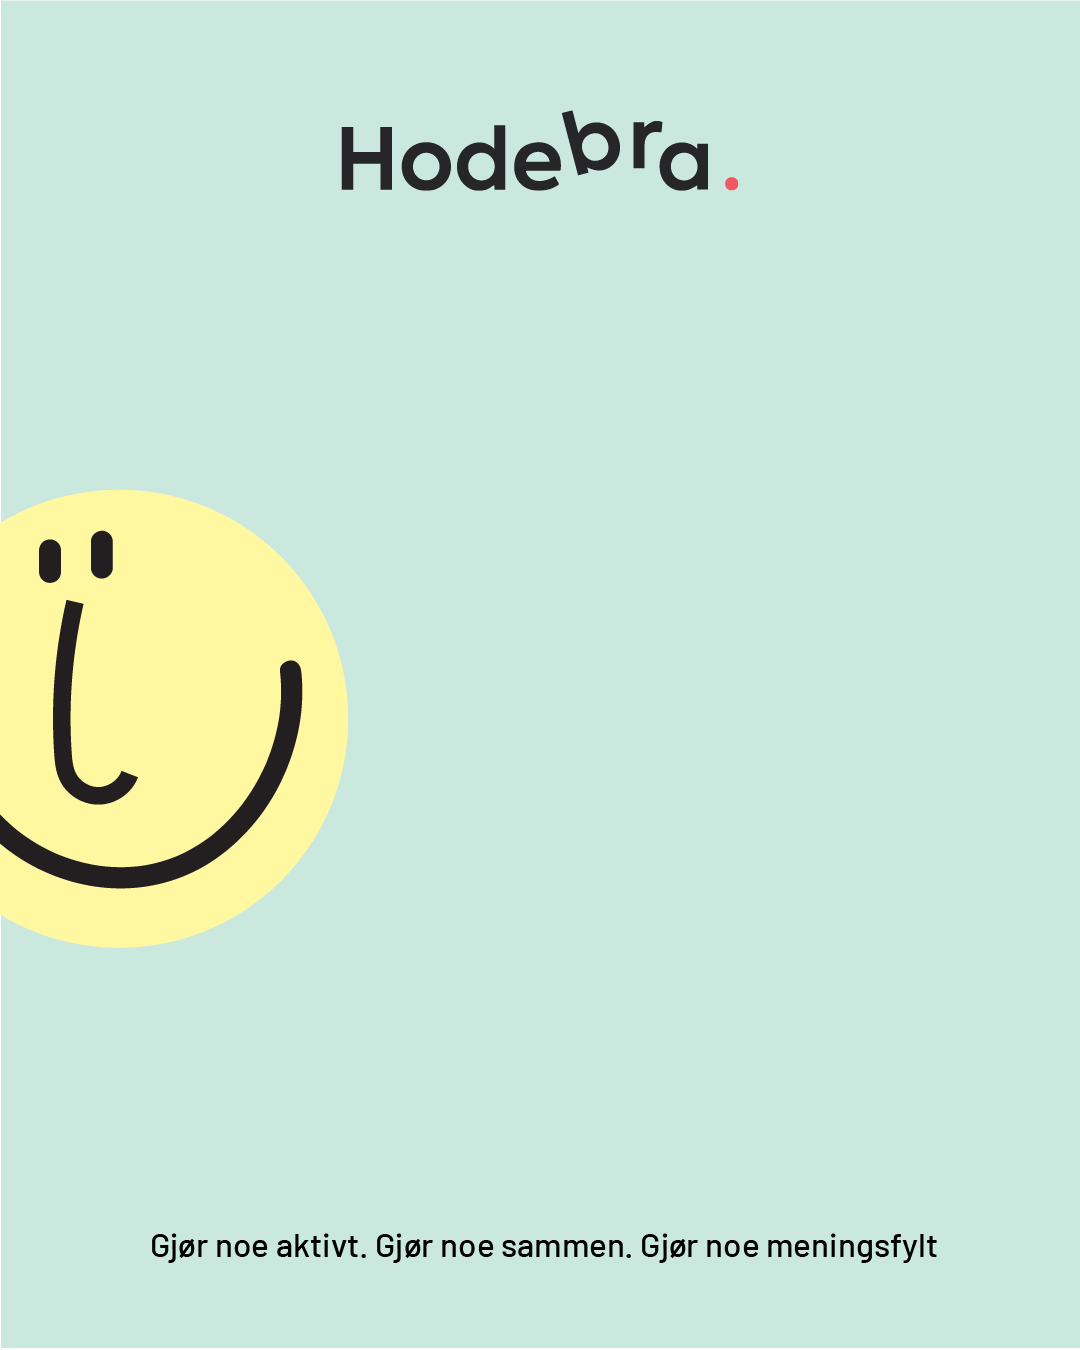 Hodebra